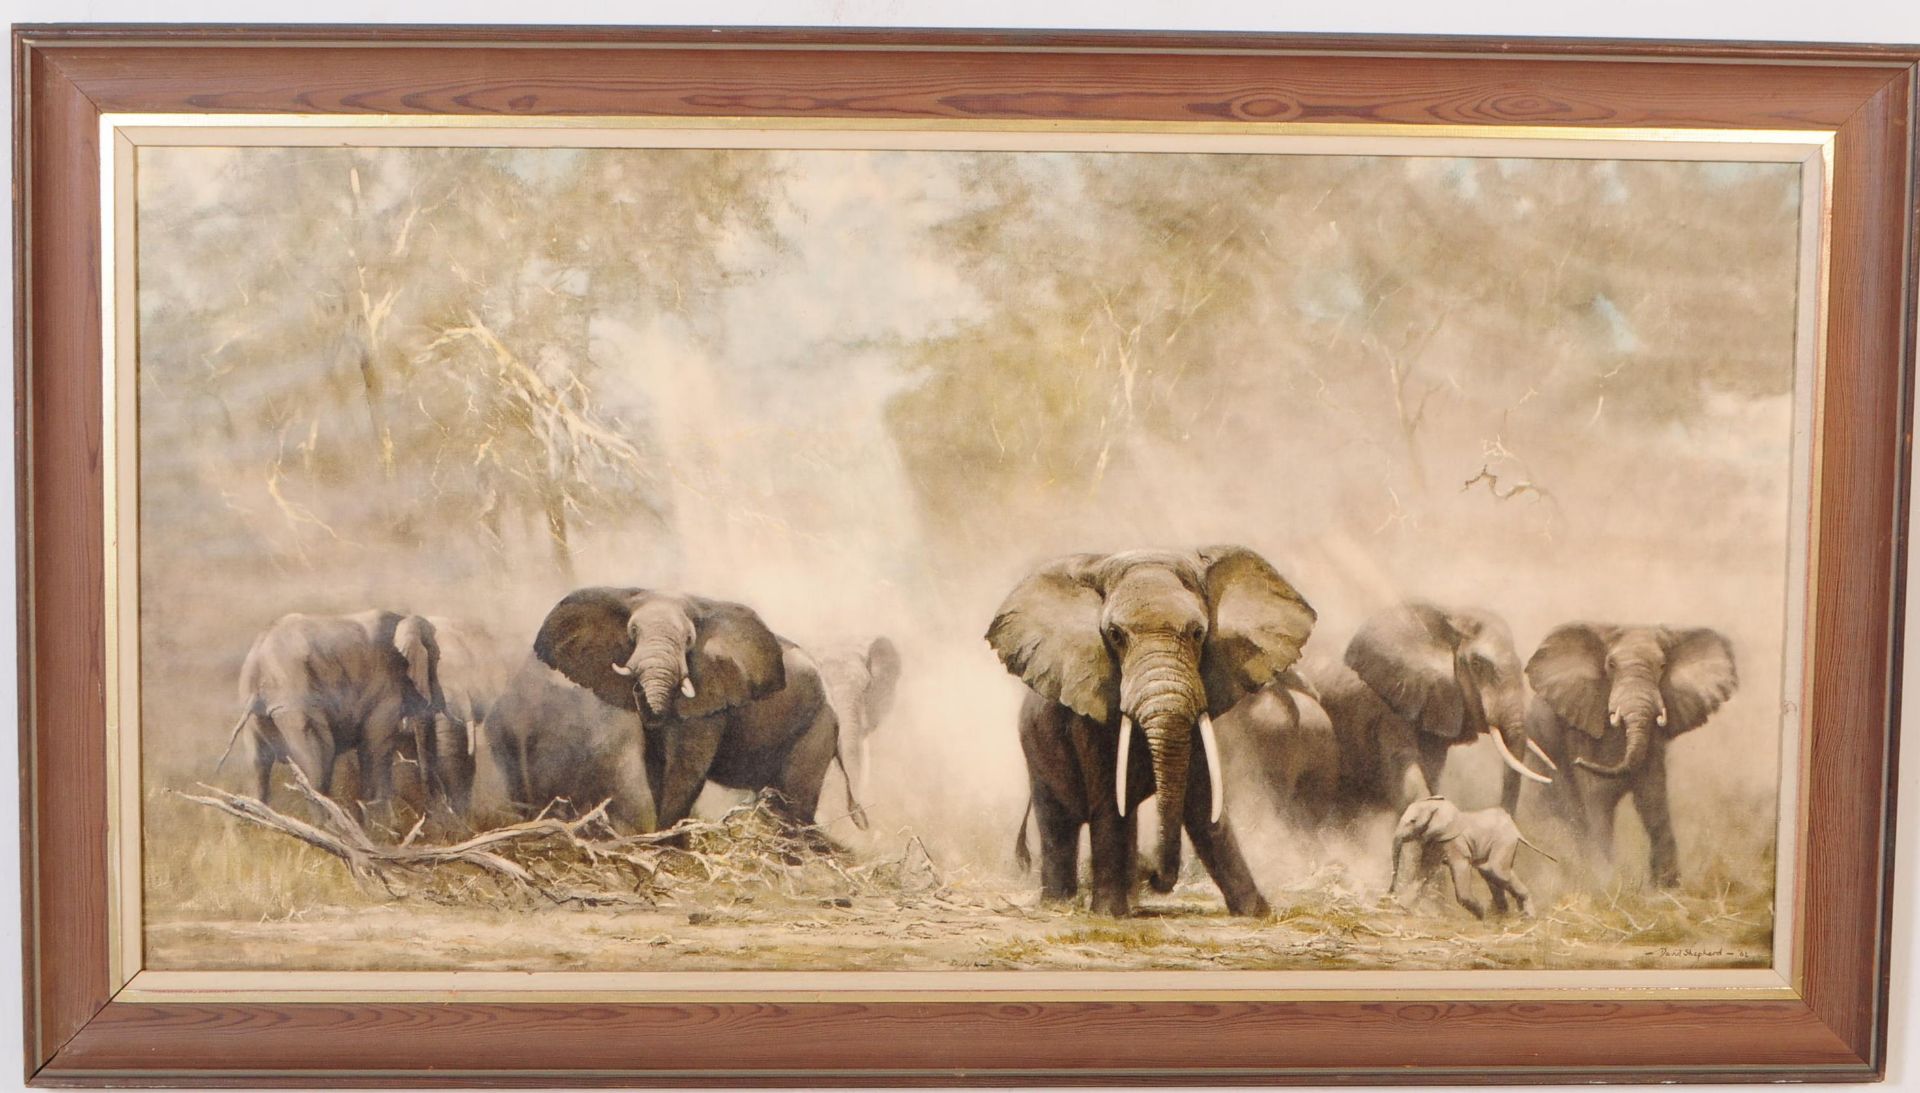 DAVID SHEPHERD PRINT TITLED 'ELEPHANTS AT AMBOSELI' FRAMED